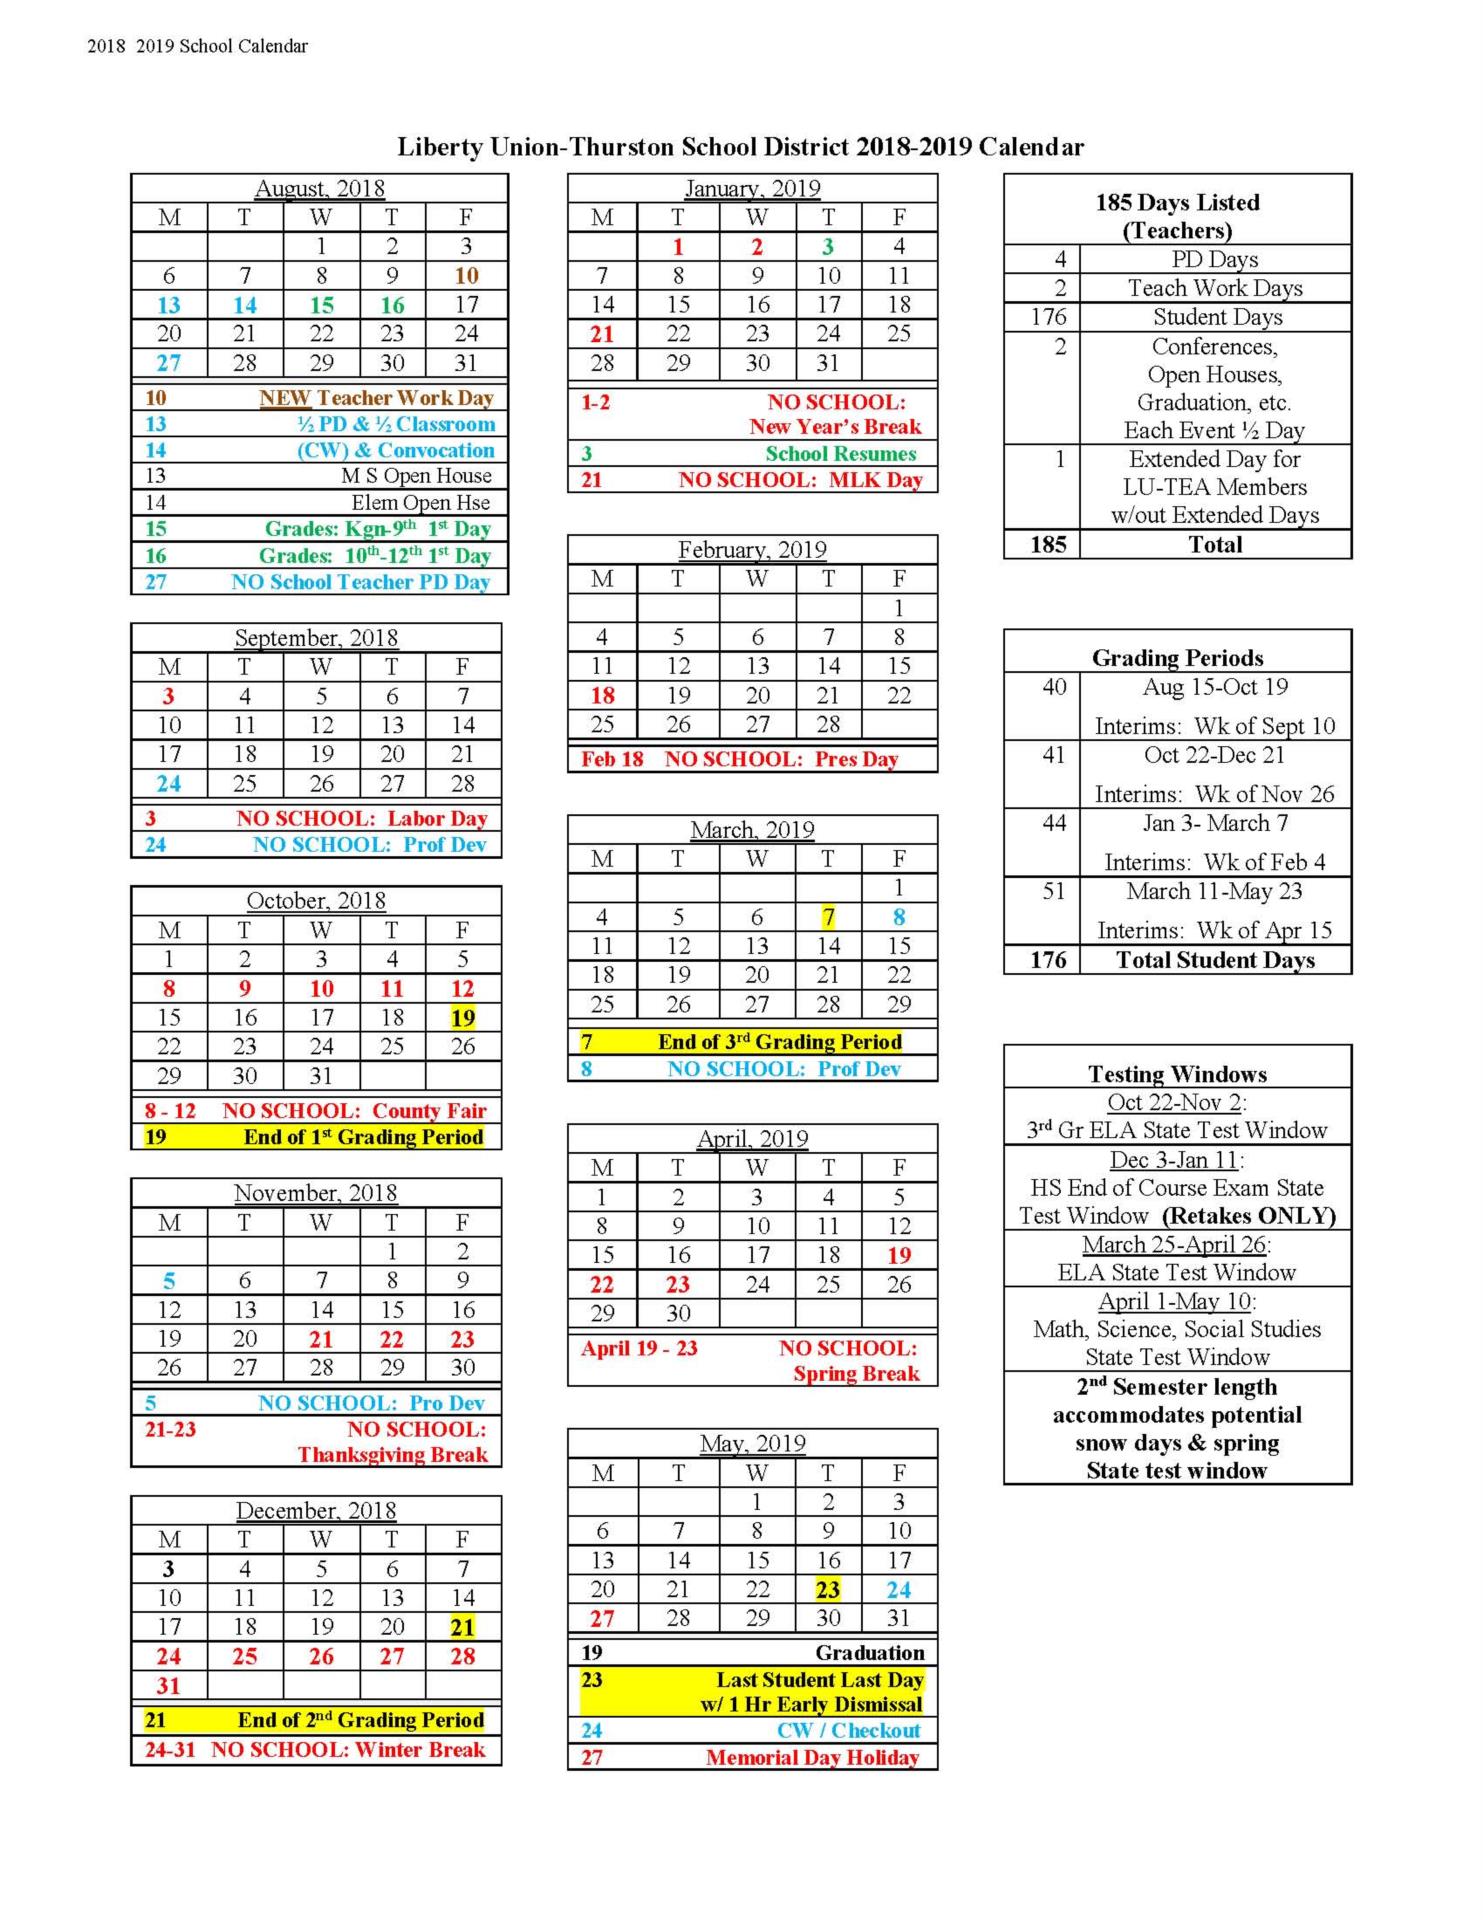 liberty-union-thurston-local-school-district-calendar-2018-and-2019-publicholidays-us